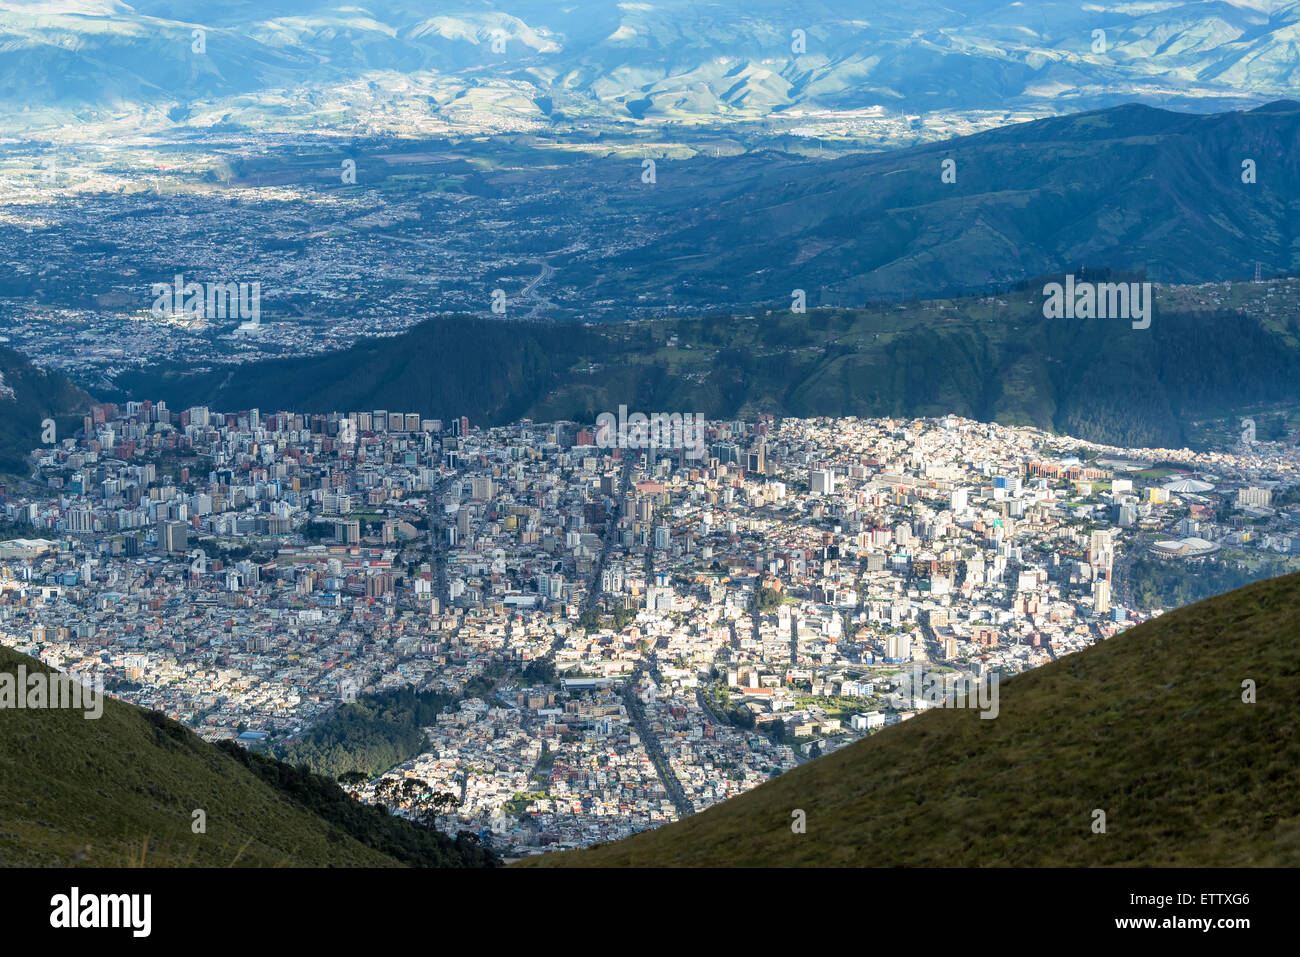 Quito, Ecuador sprawling out over the landscape Stock Photo